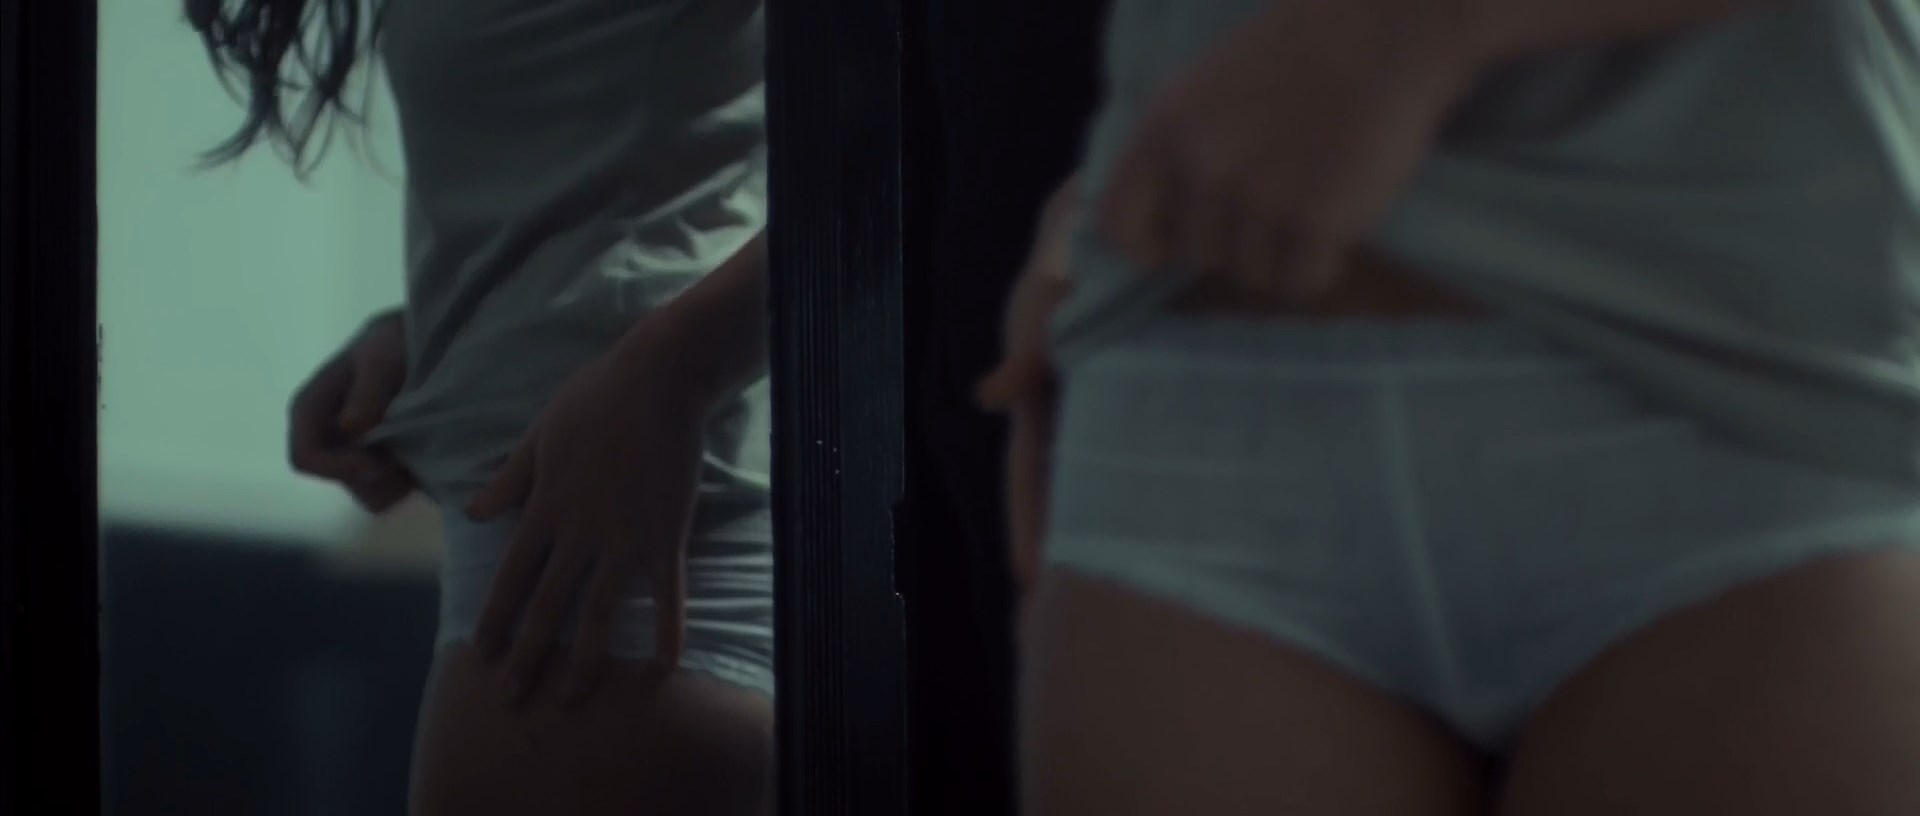 Nude video celebs » Elma Begovic sexy, Annette Wozniak sexy, Denise Yuen  sexy - Bite (2015)